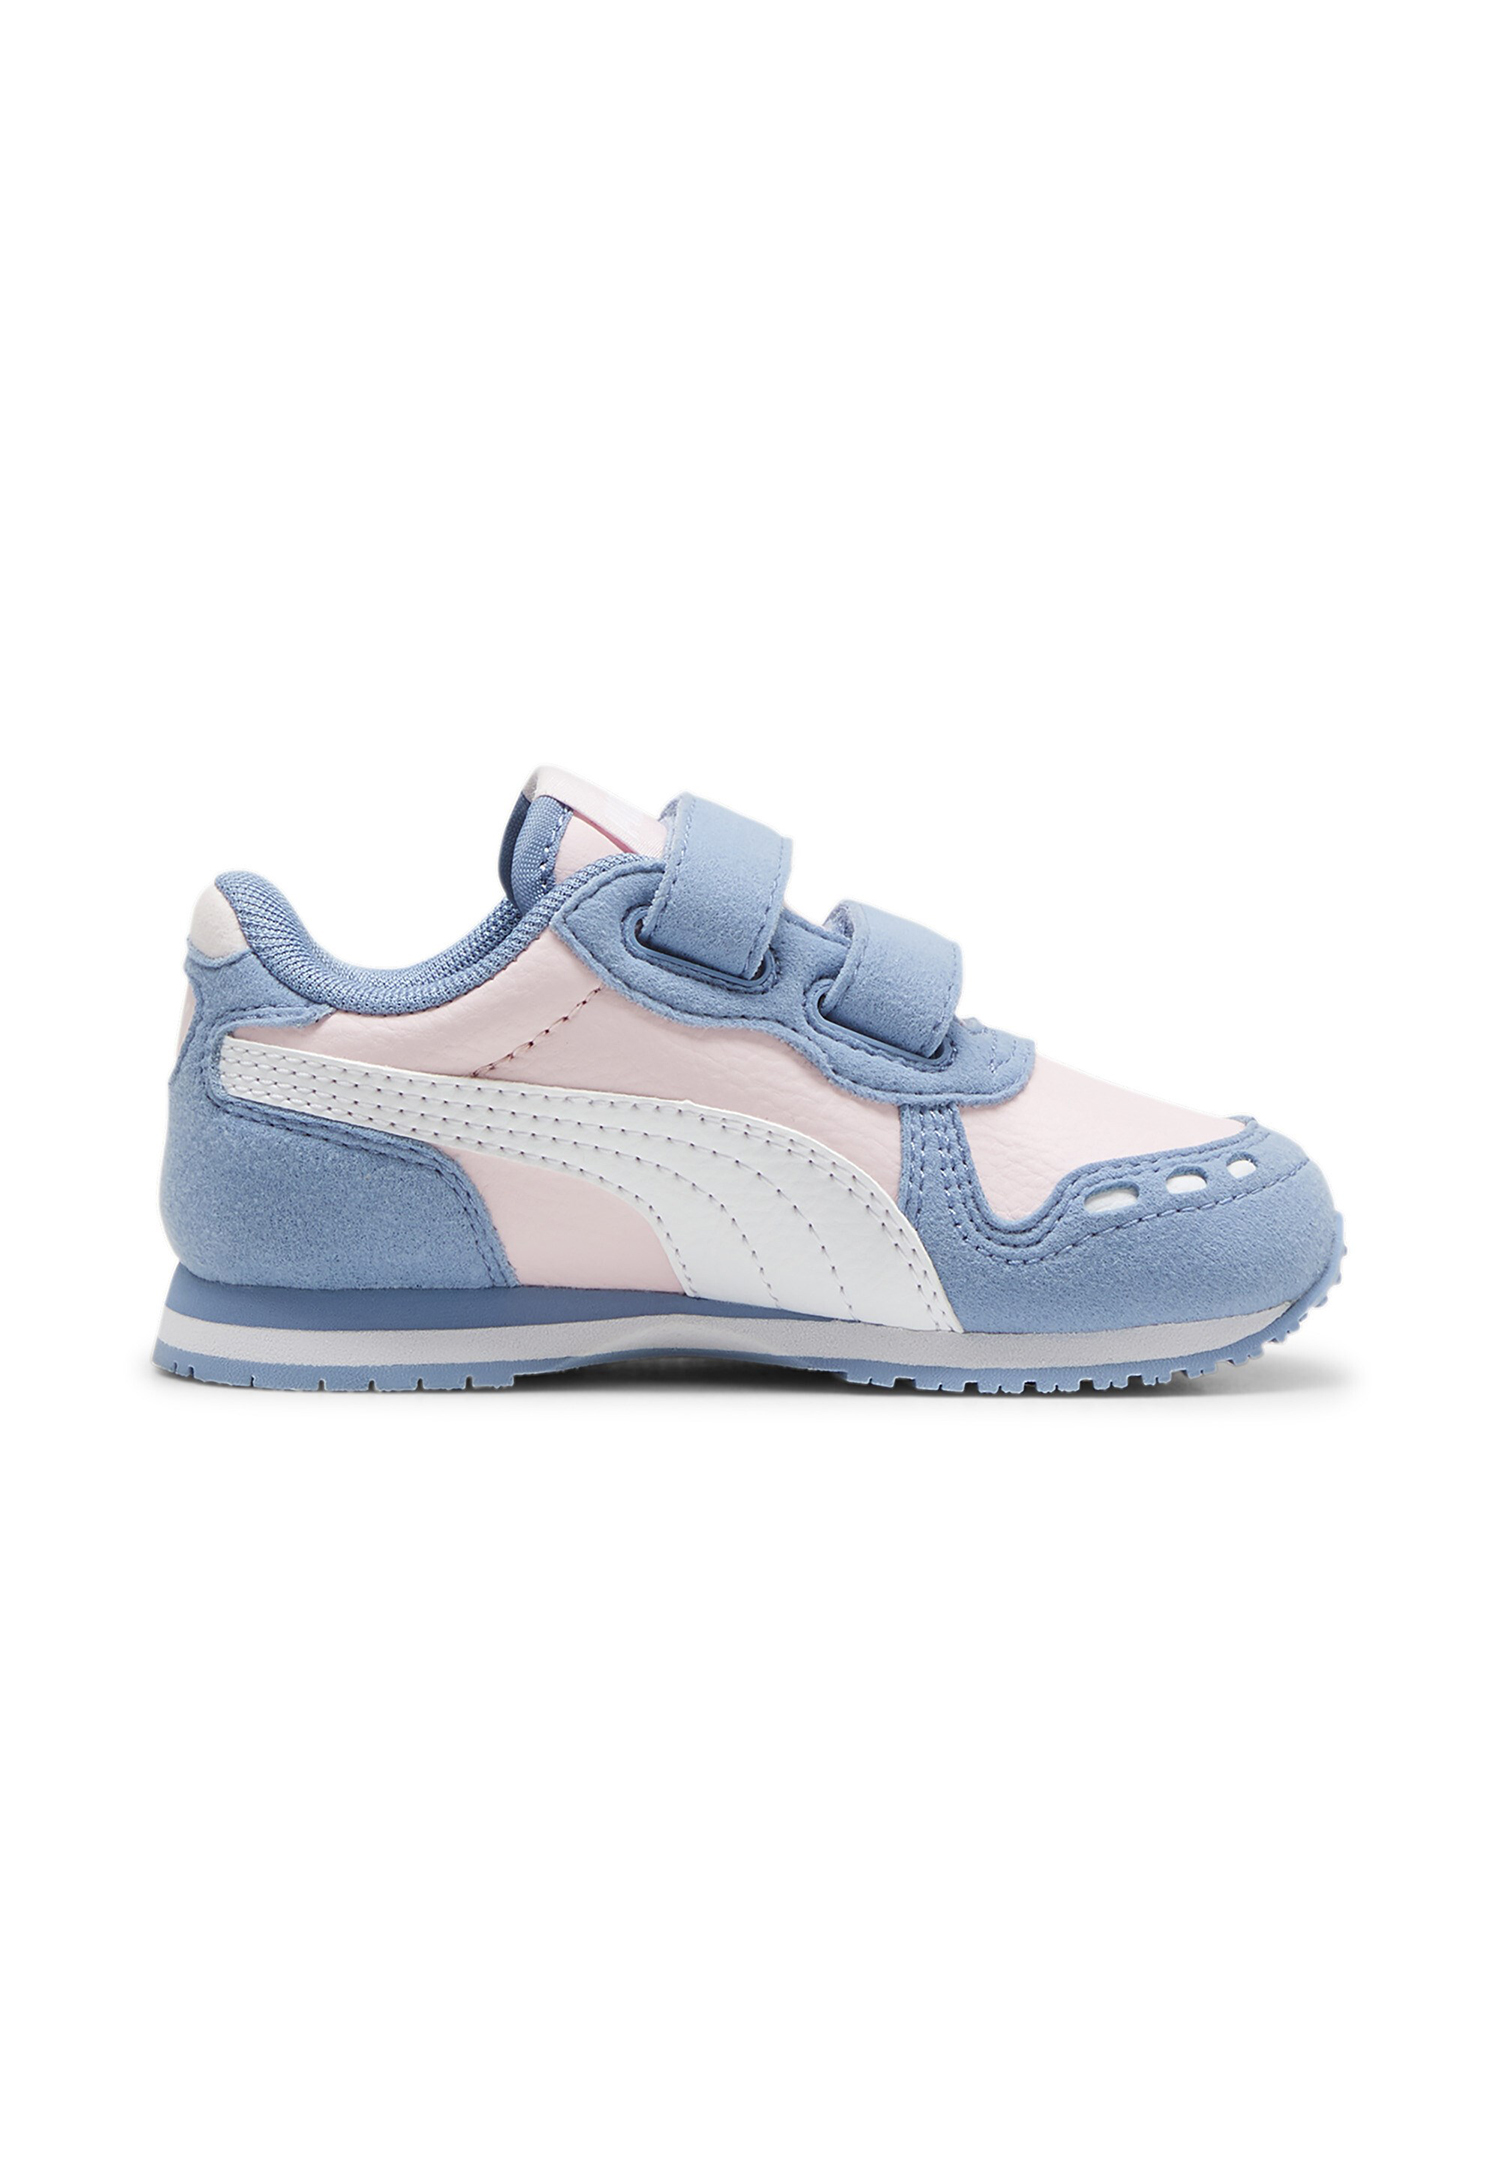 PUMA Cabana Racer SL 20 V Inf Kinder Sneaker Turnschuhe 383731 14 rosa/blau/weiß